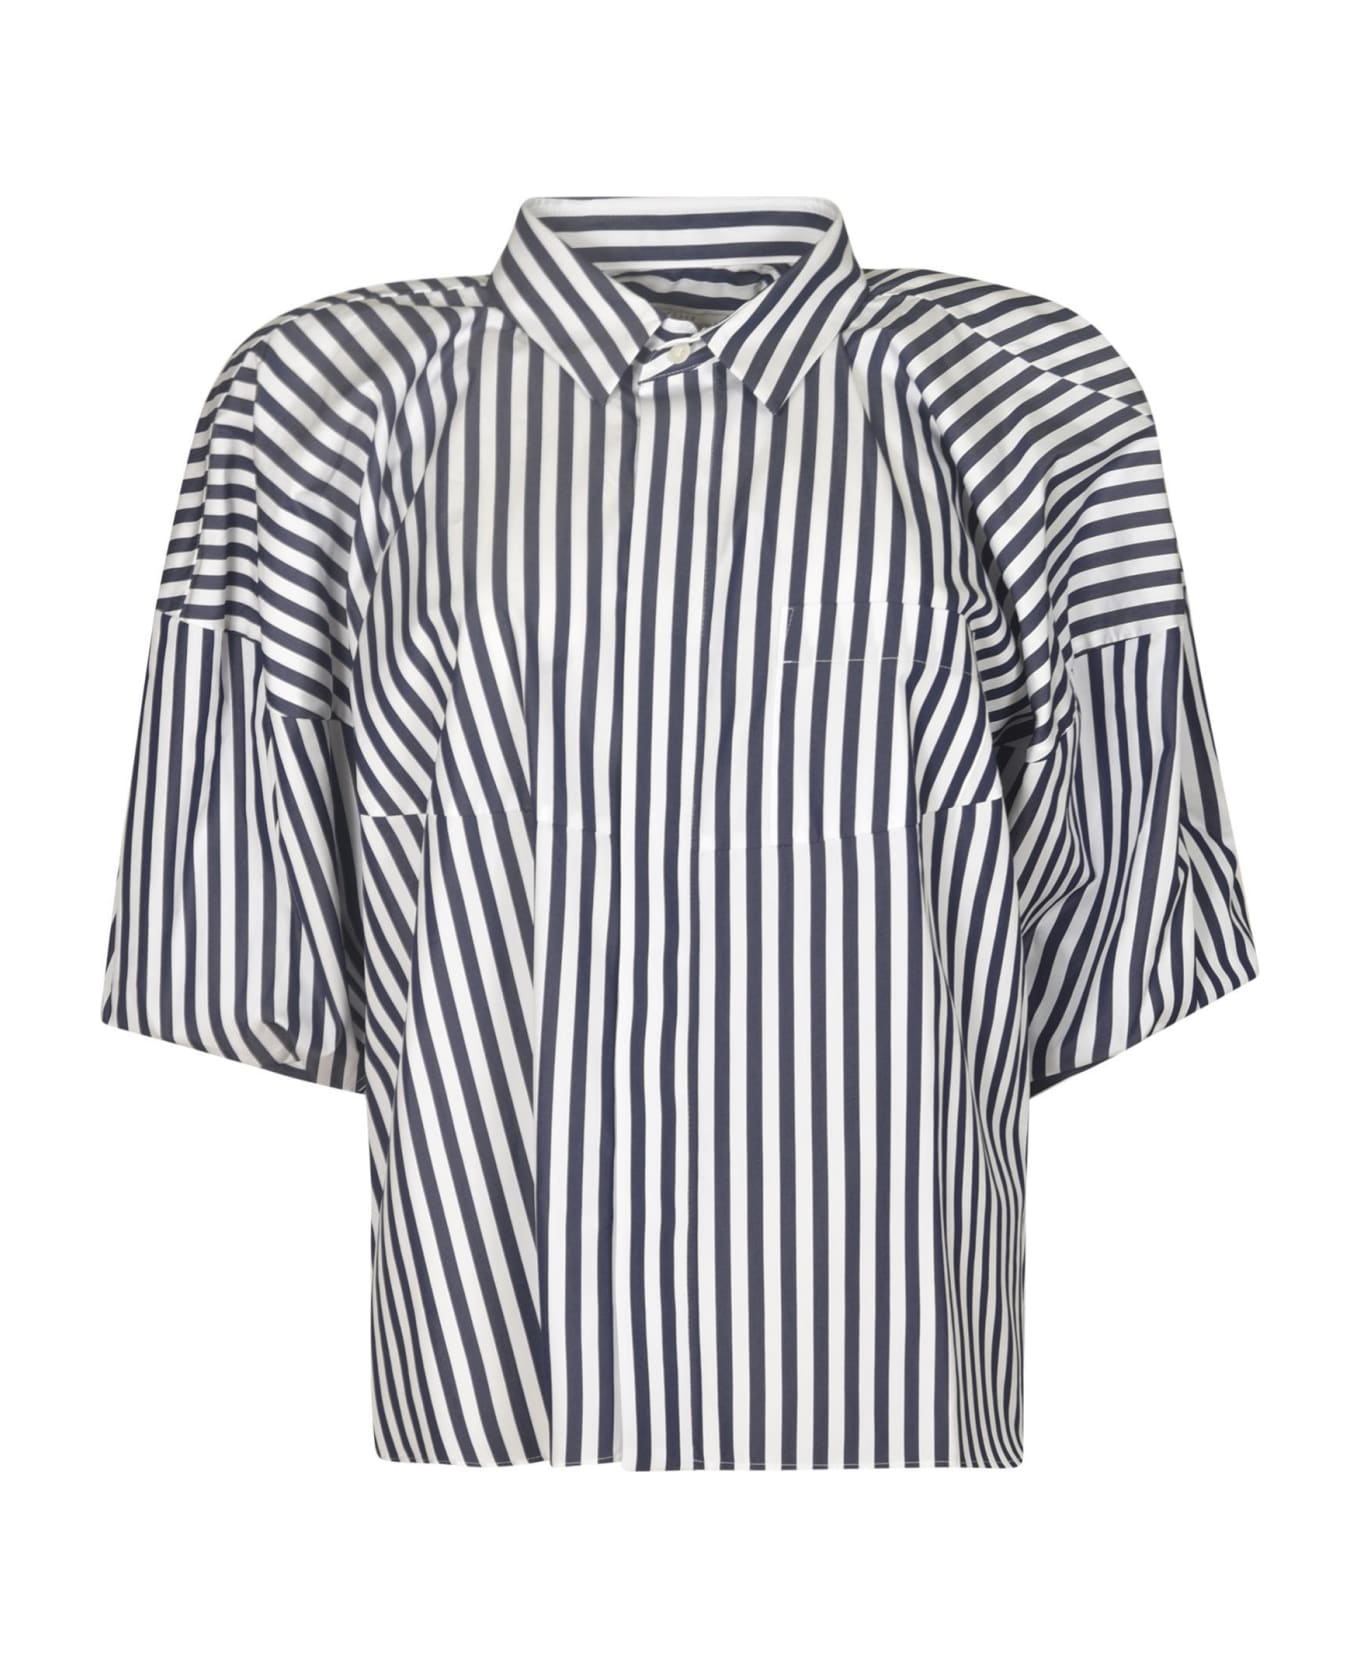 Sacai Striped Shirt - Navy